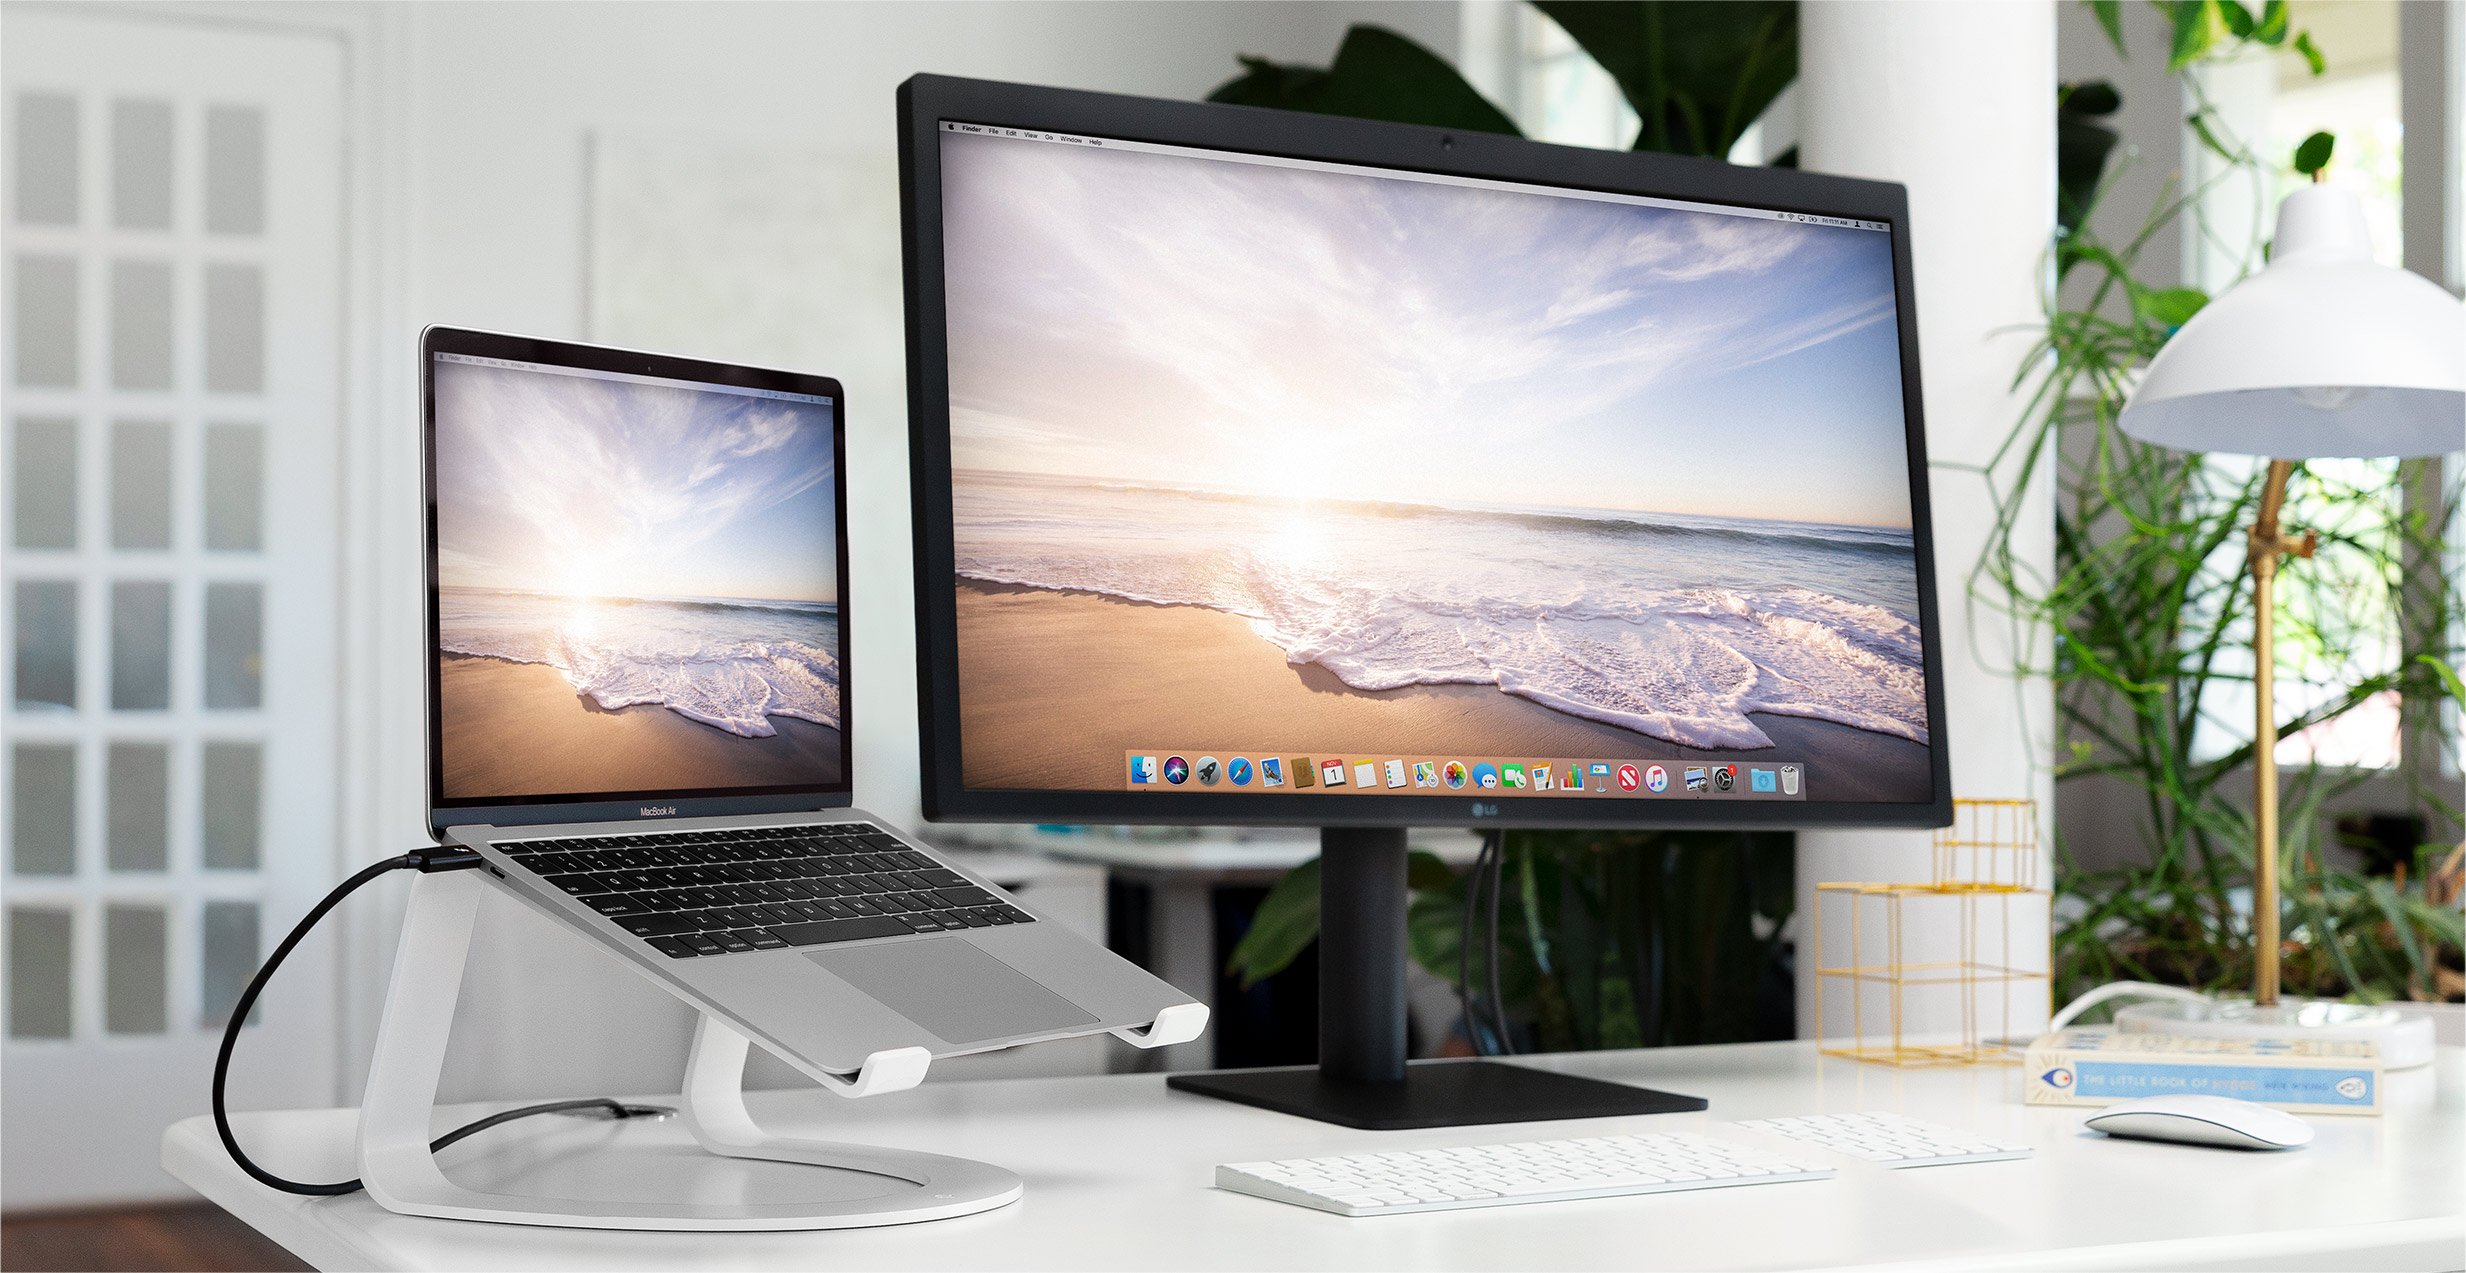 a laptop on the Curve, next to an Apple desktop computer